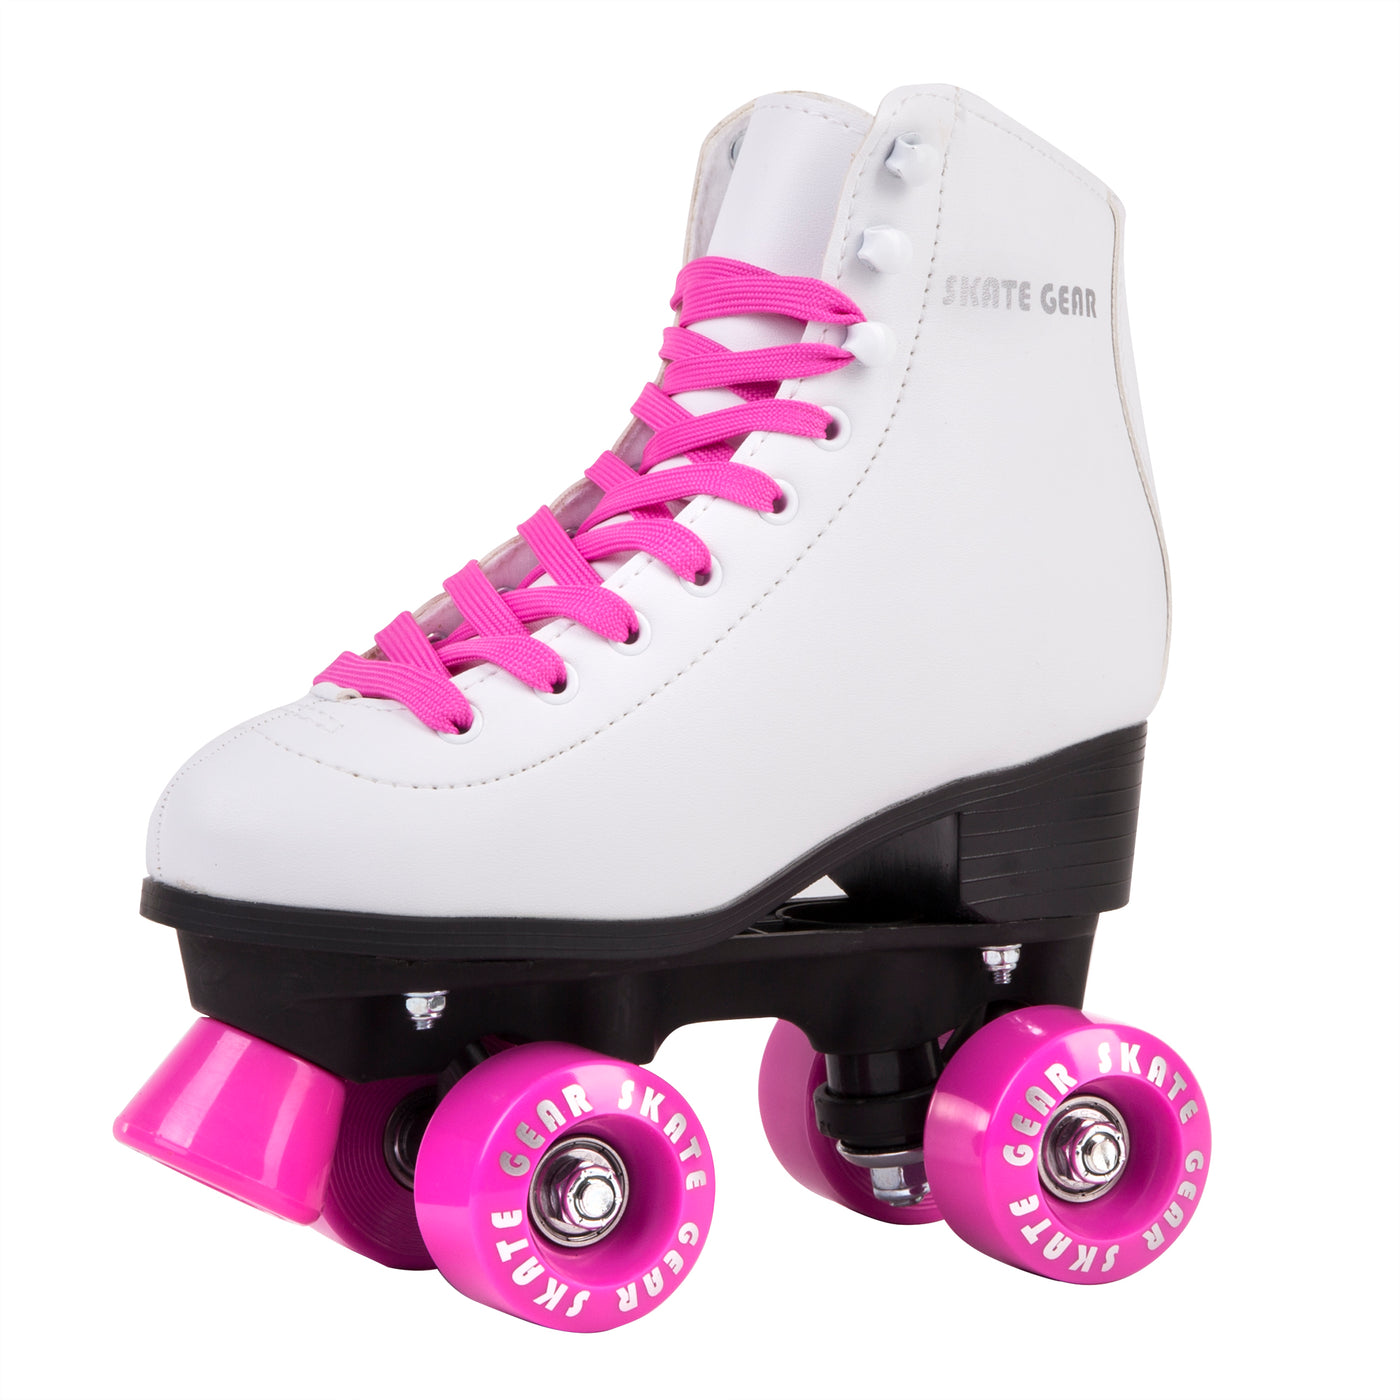 mayor Arancel Tanga estrecha Skate Gear Roller Skates with Ankle Support – Shop709.com